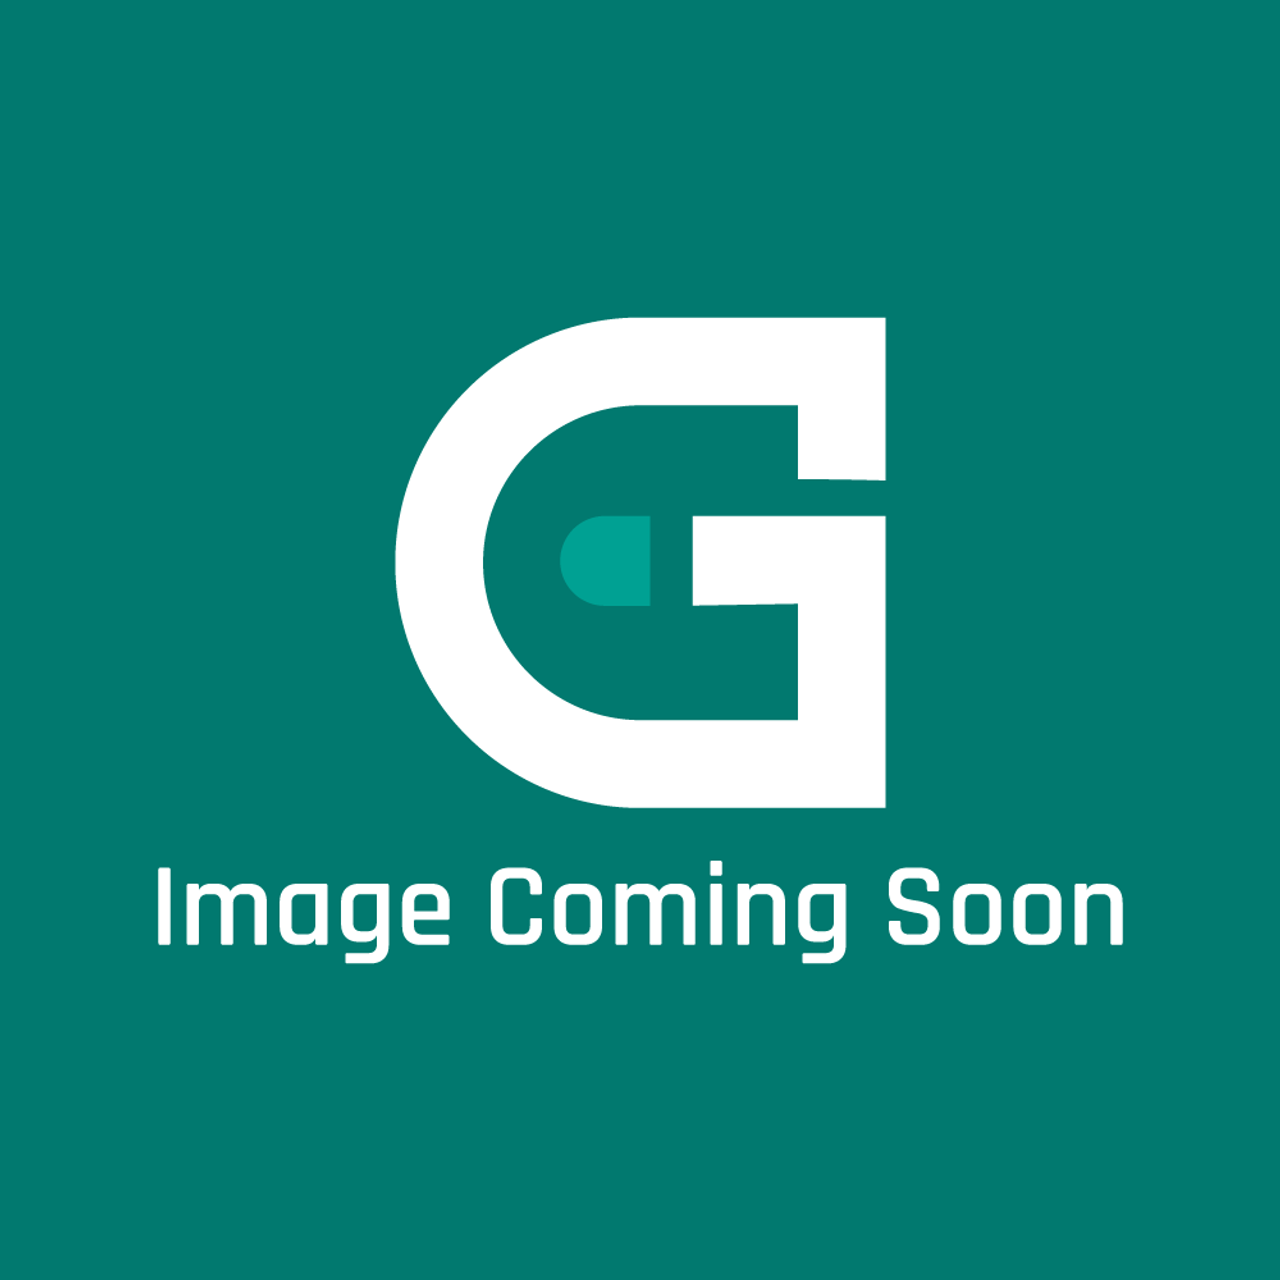 GE Appliances WB18T10581 - Optional 6 Ft Conduit - Image Coming Soon!